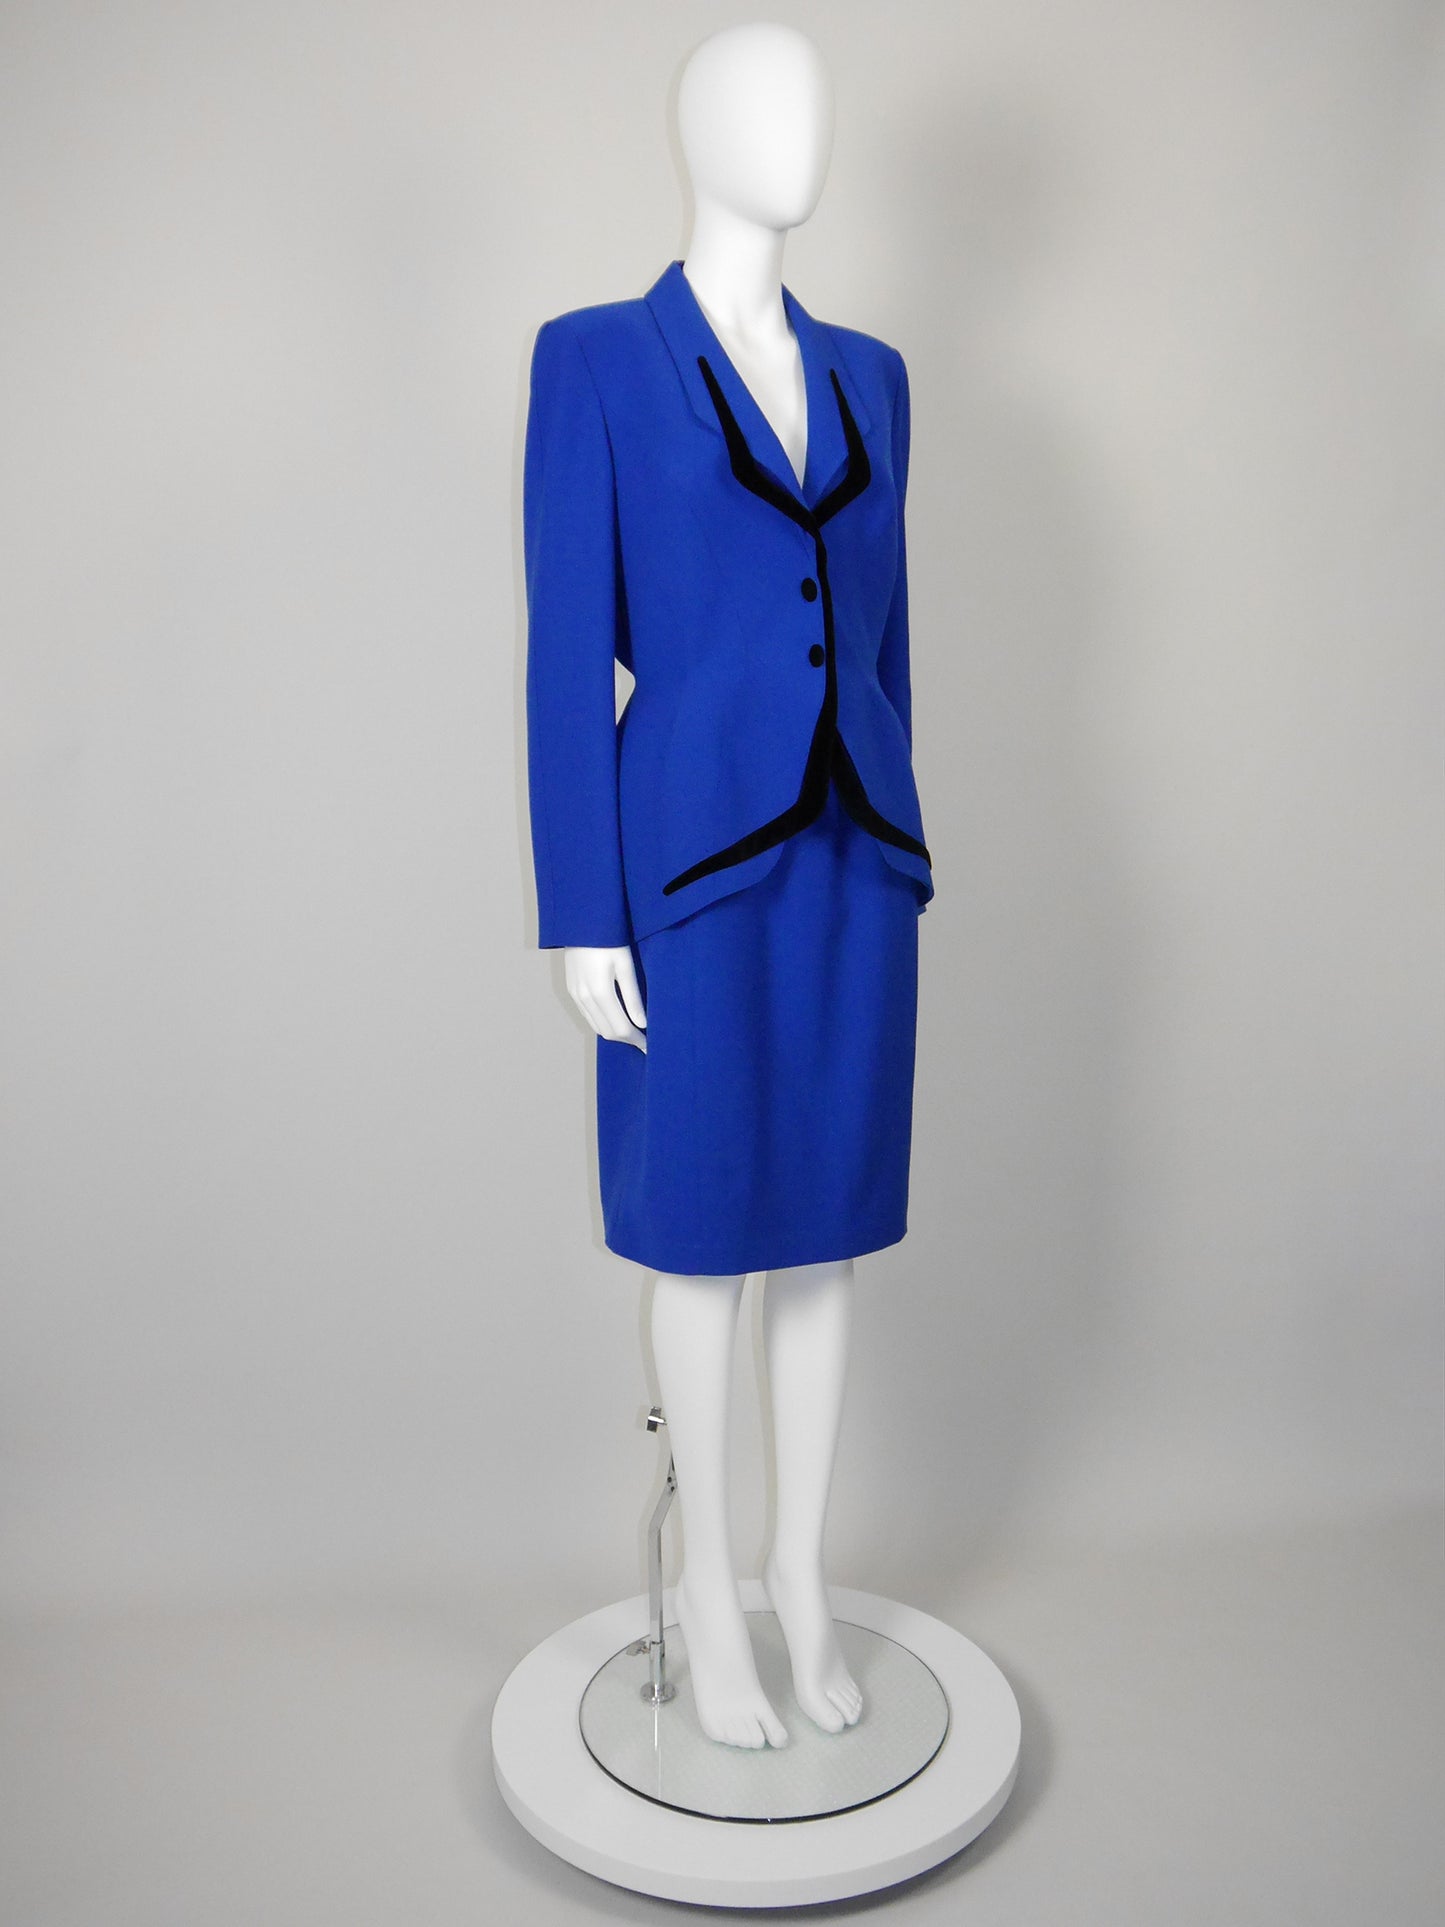 THIERRY MUGLER 1980s 1990s Vintage Electric Blue Jacket & Skirt Suit w/ Velvet Accents